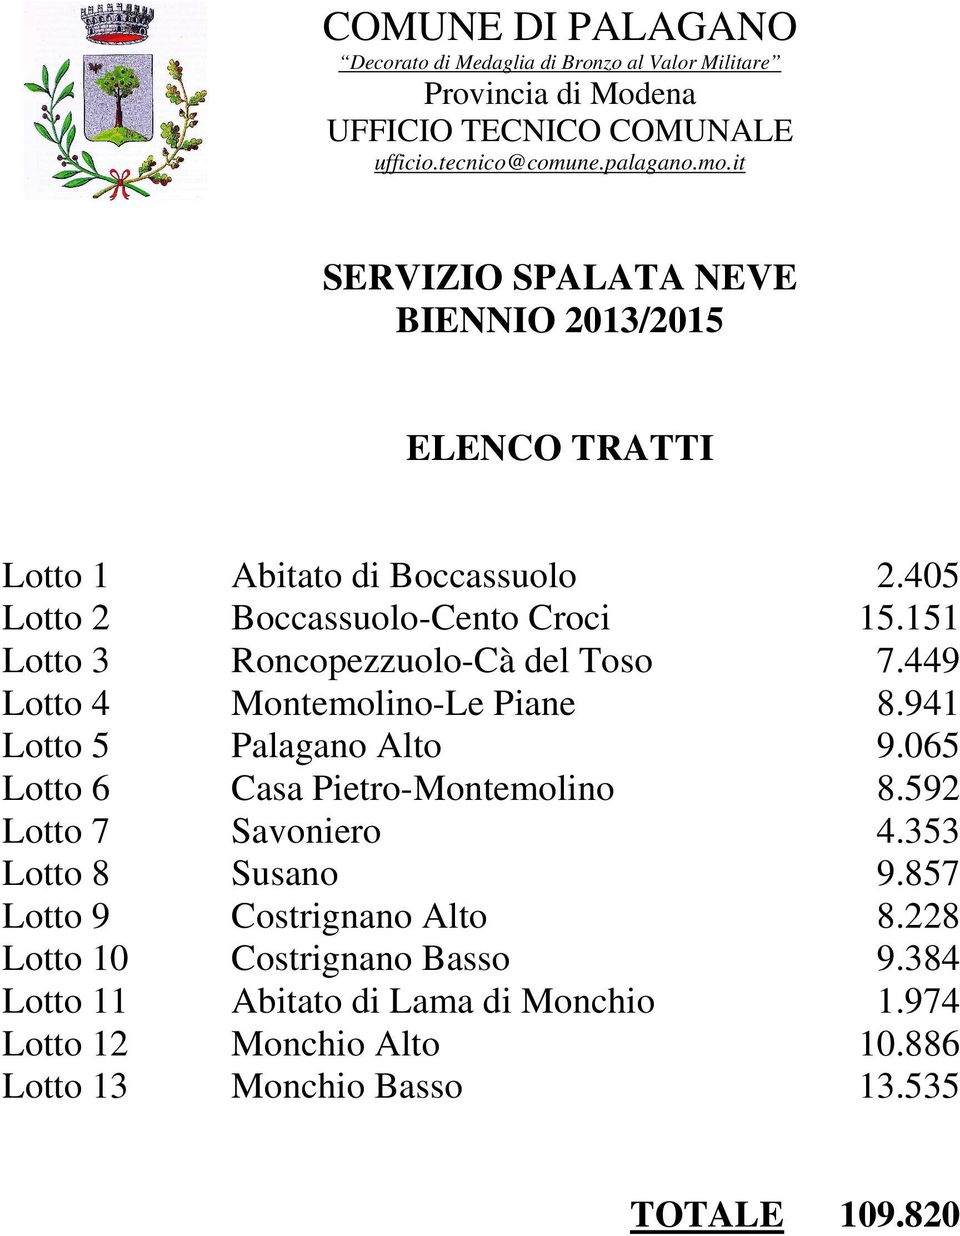 941 Lotto 5 Palagano Alto 9.065 Lotto 6 Casa Pietro-Montemolino 8.592 Lotto 7 Savoniero 4.353 Lotto 8 Susano 9.